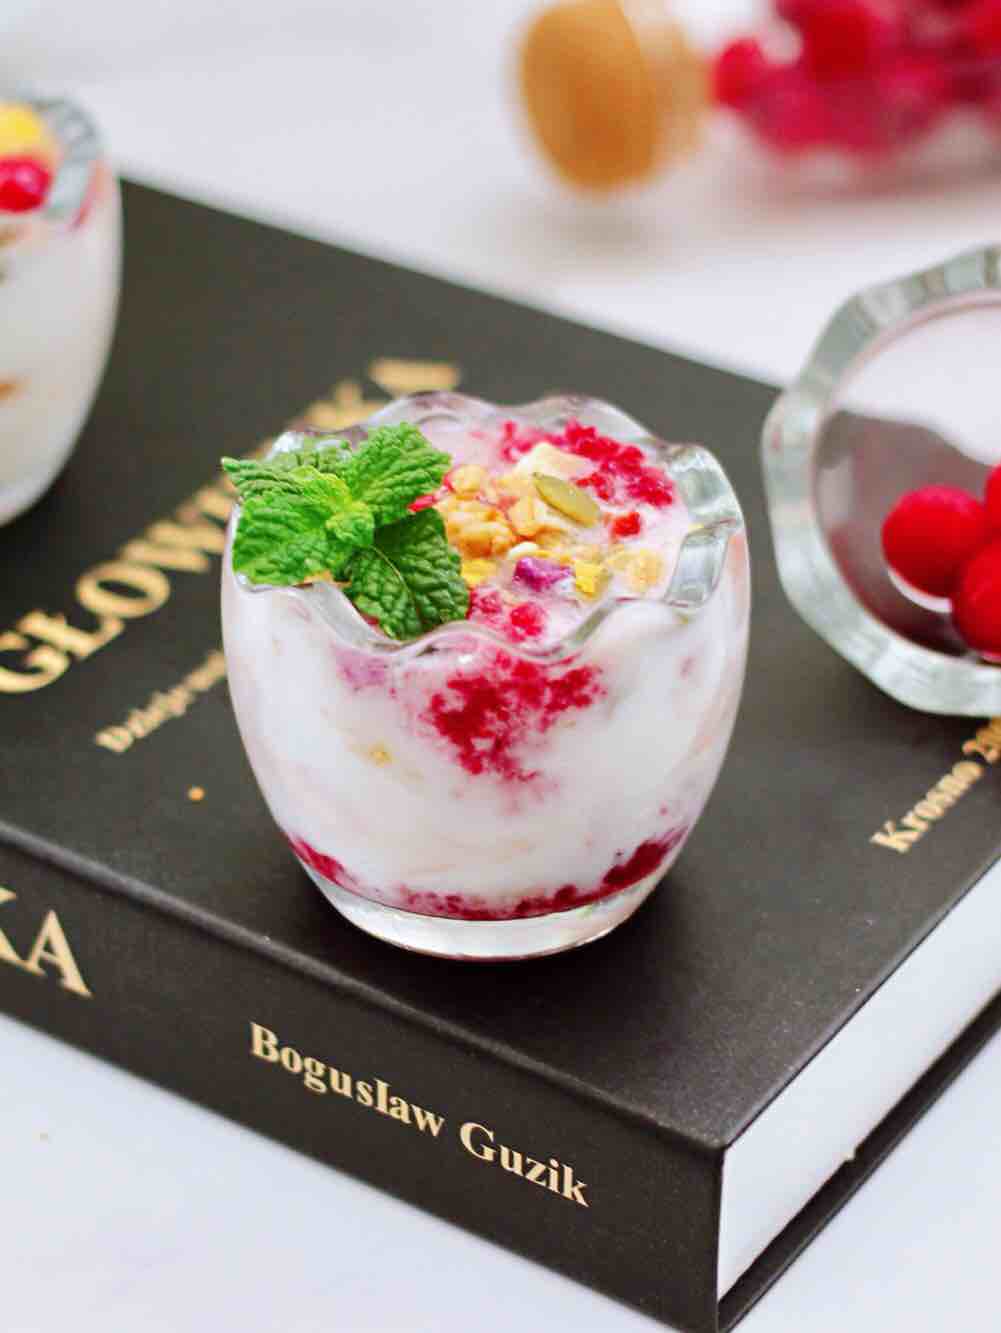 Homemade Cranberry Ice Yogurt (with Yogurt Recipe Included)